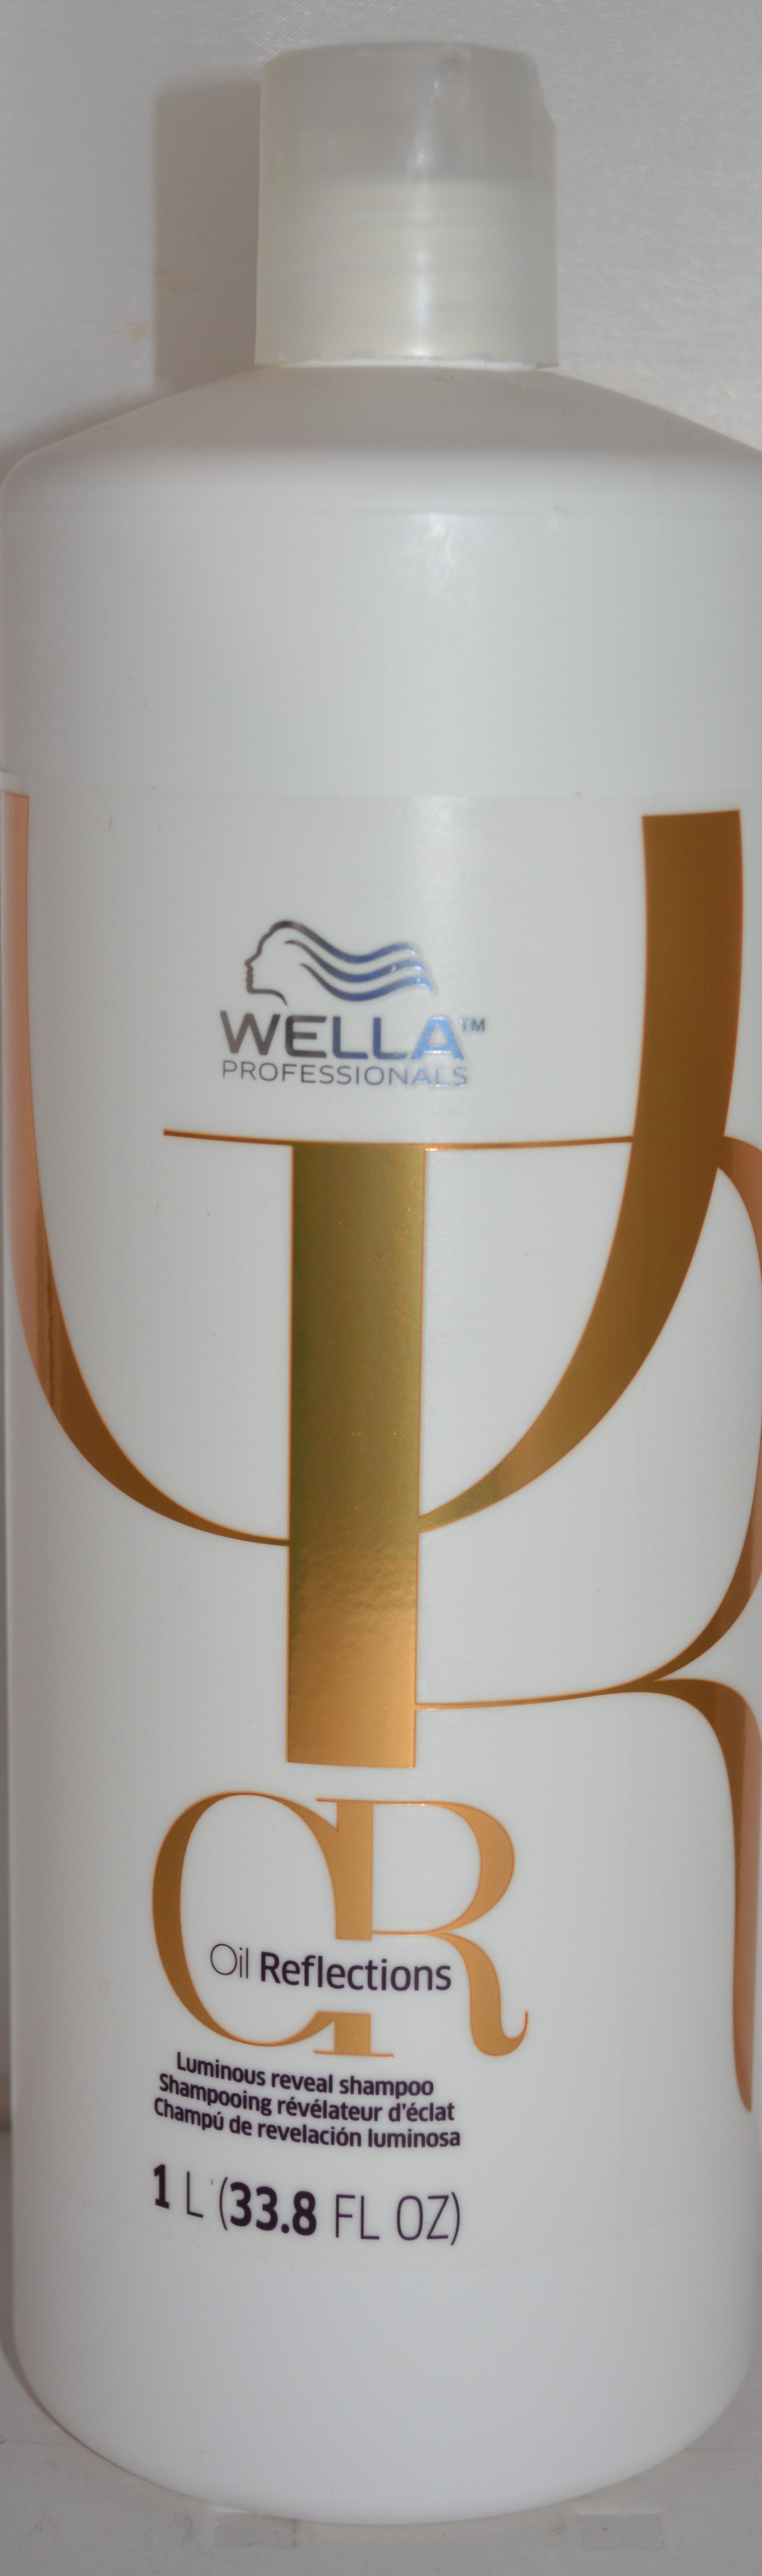 Wella Oil Reflections Luminous Reveal Shampoo 33.8 oz (1 liter)